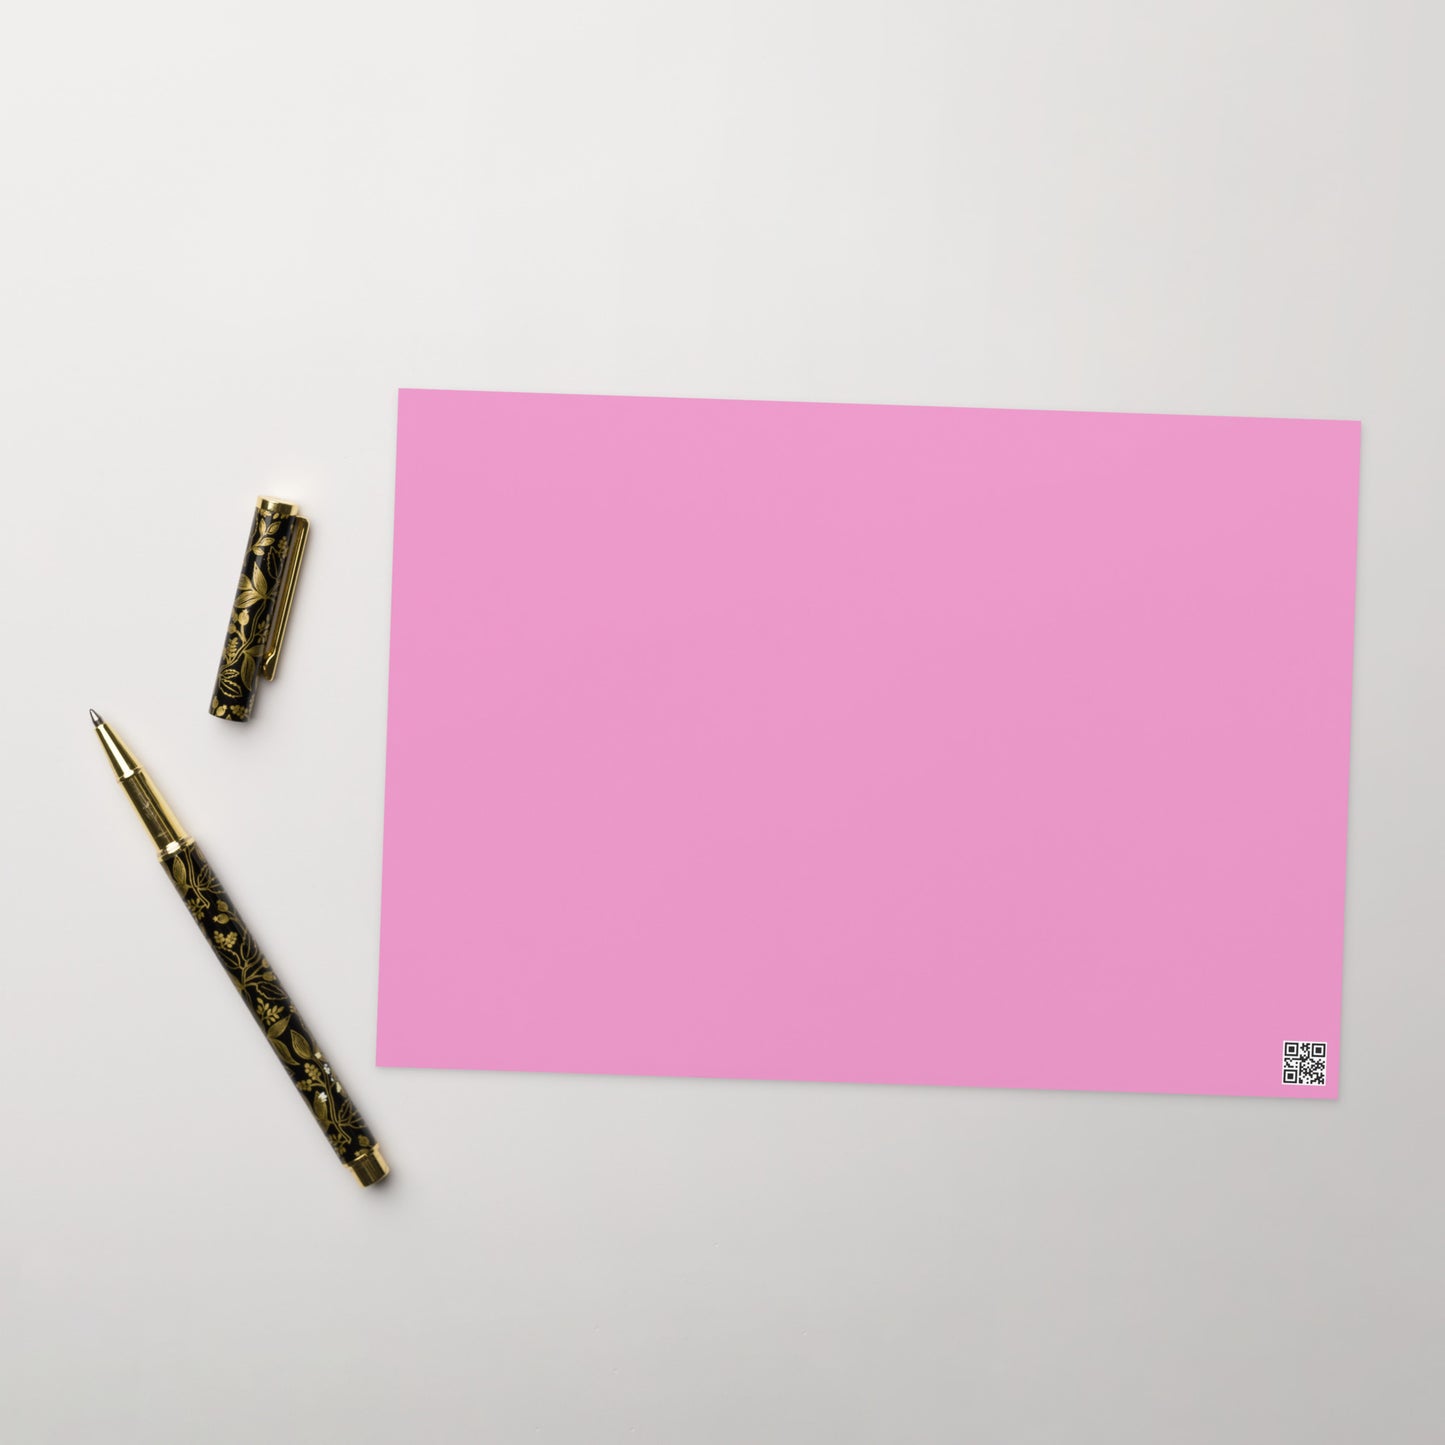 Round Pink Cat Greeting card - Art Love Decor